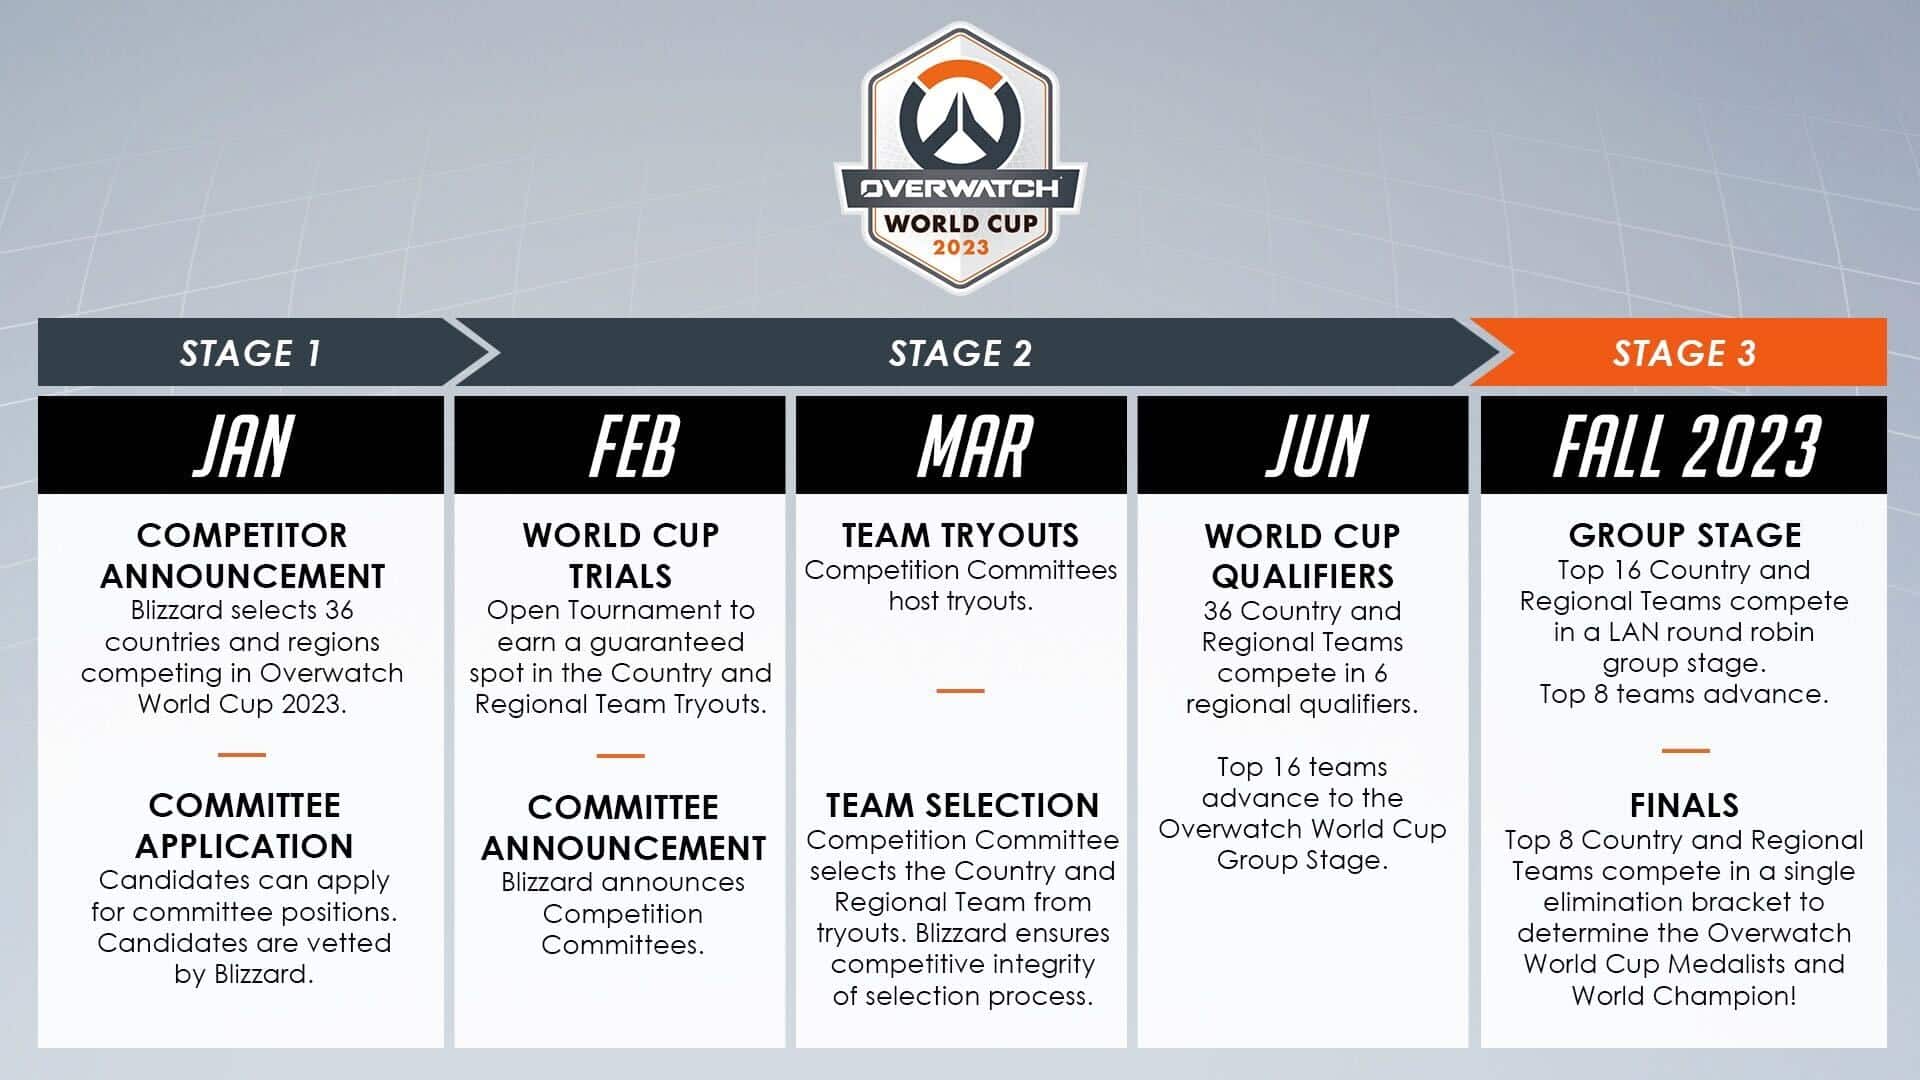 Fasi Overwatch world cup 2023